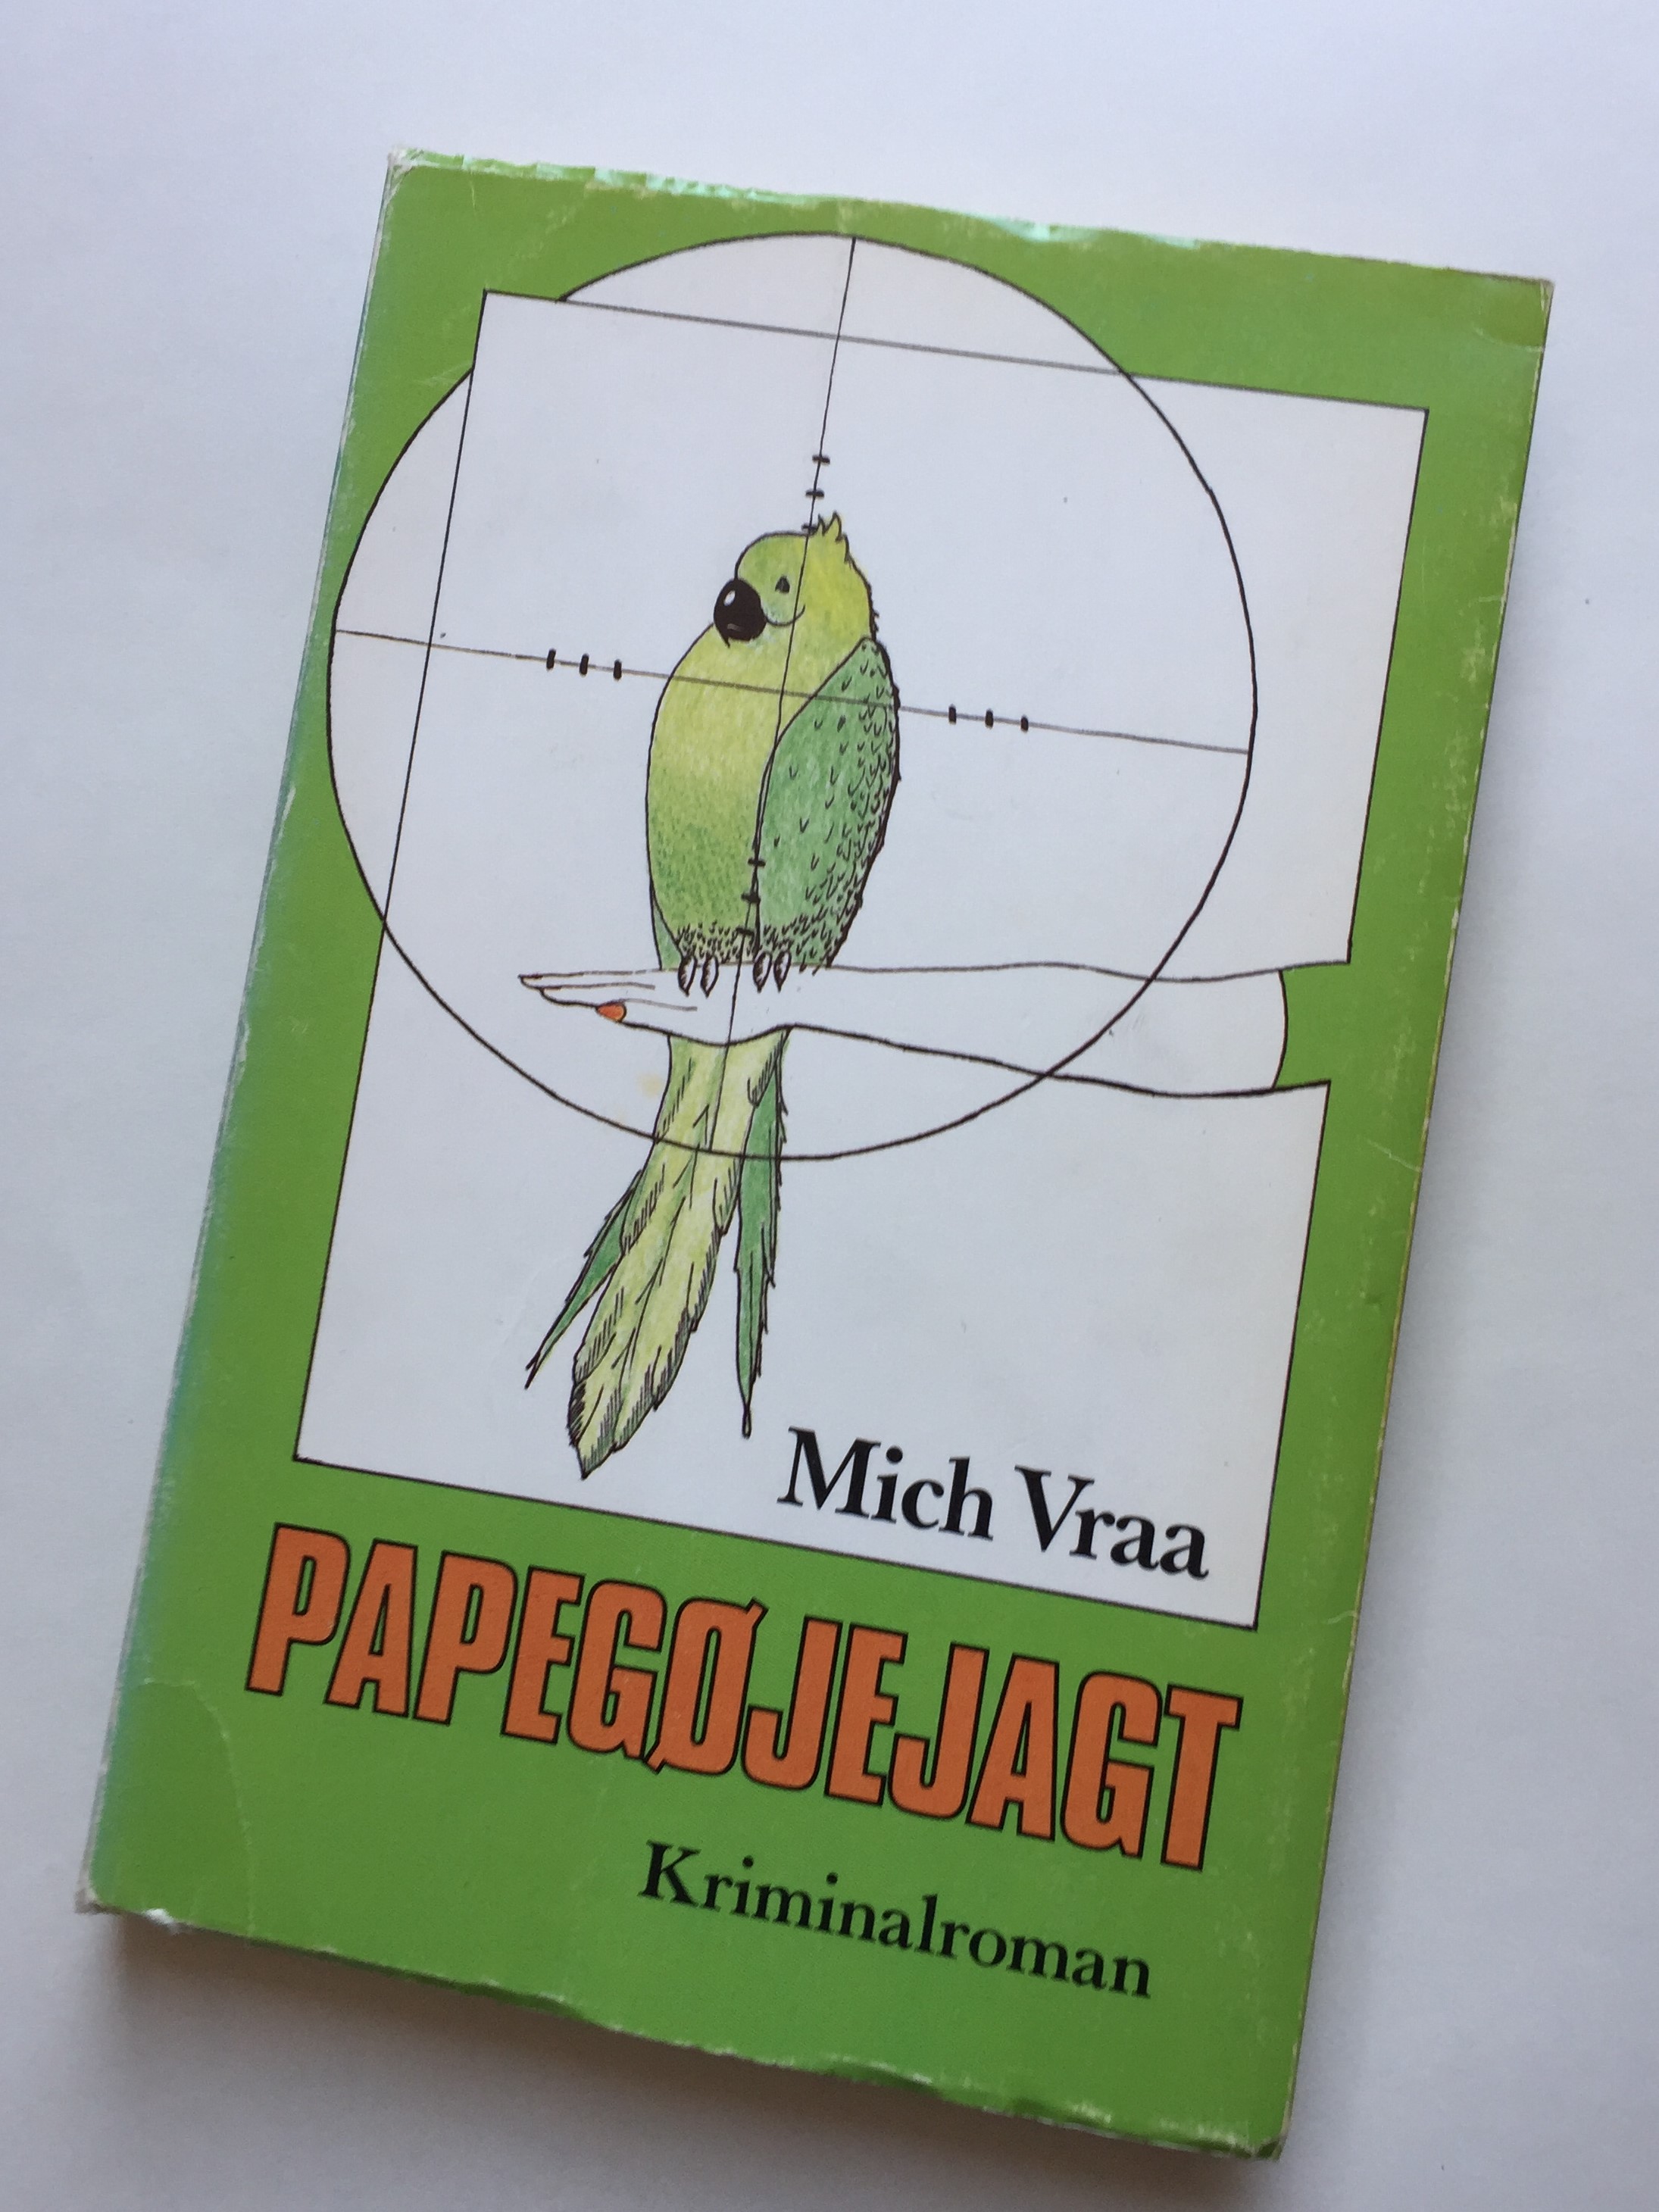 Mich Vraa, debut, debutroman, "Papegøjejagt"